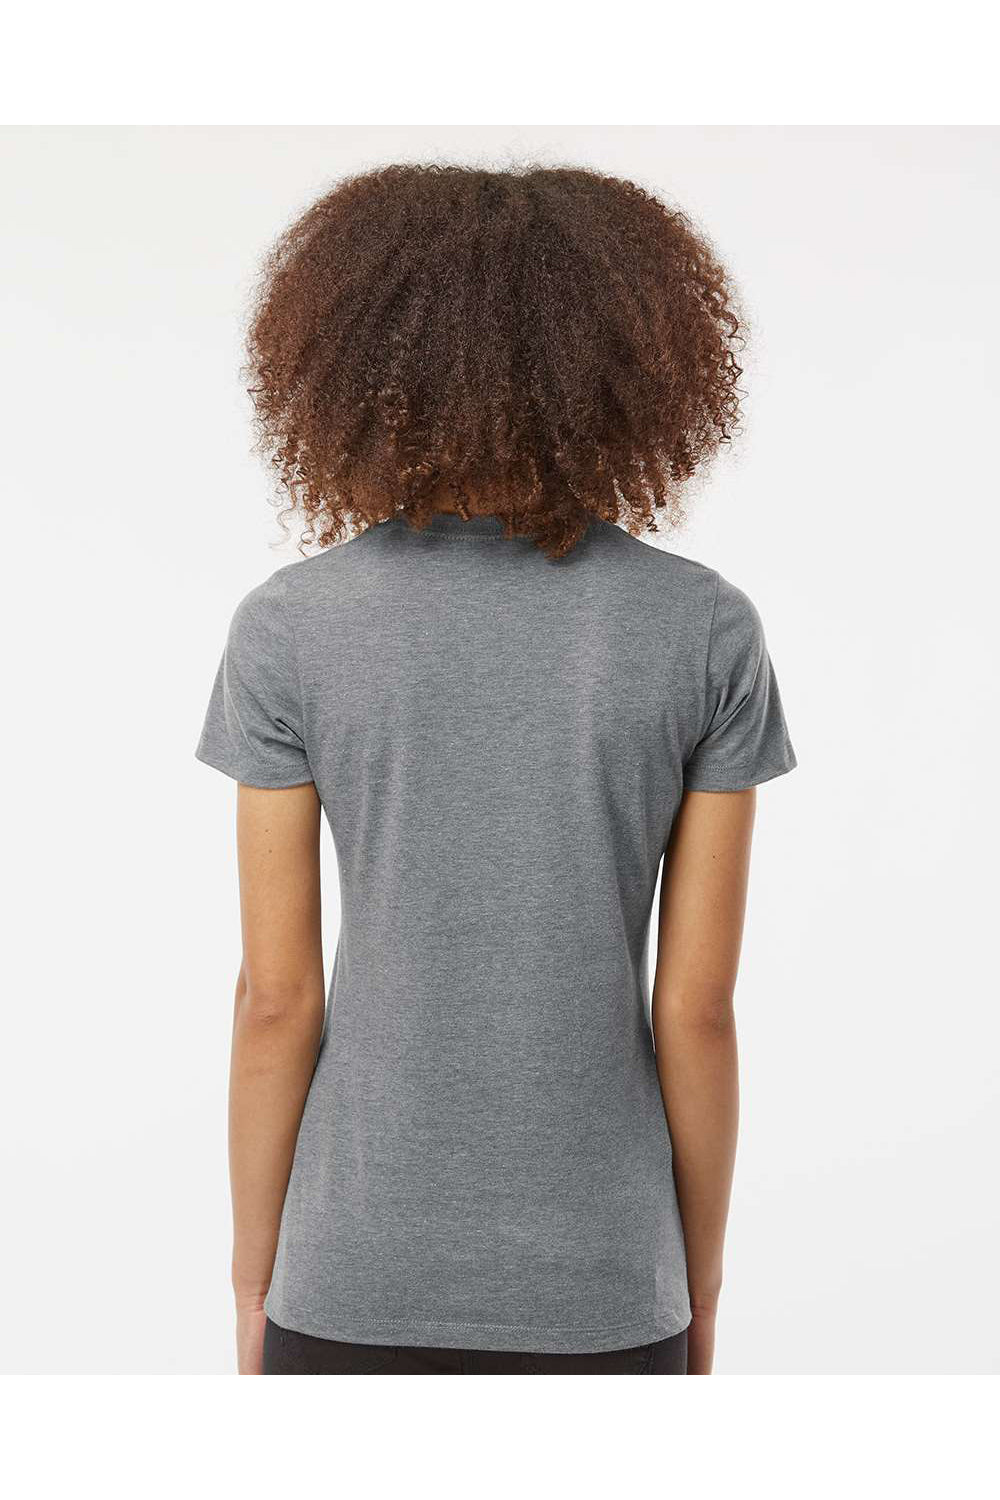 Tultex 542 Womens Premium Short Sleeve Crewneck T-Shirt Heather Grey Model Back